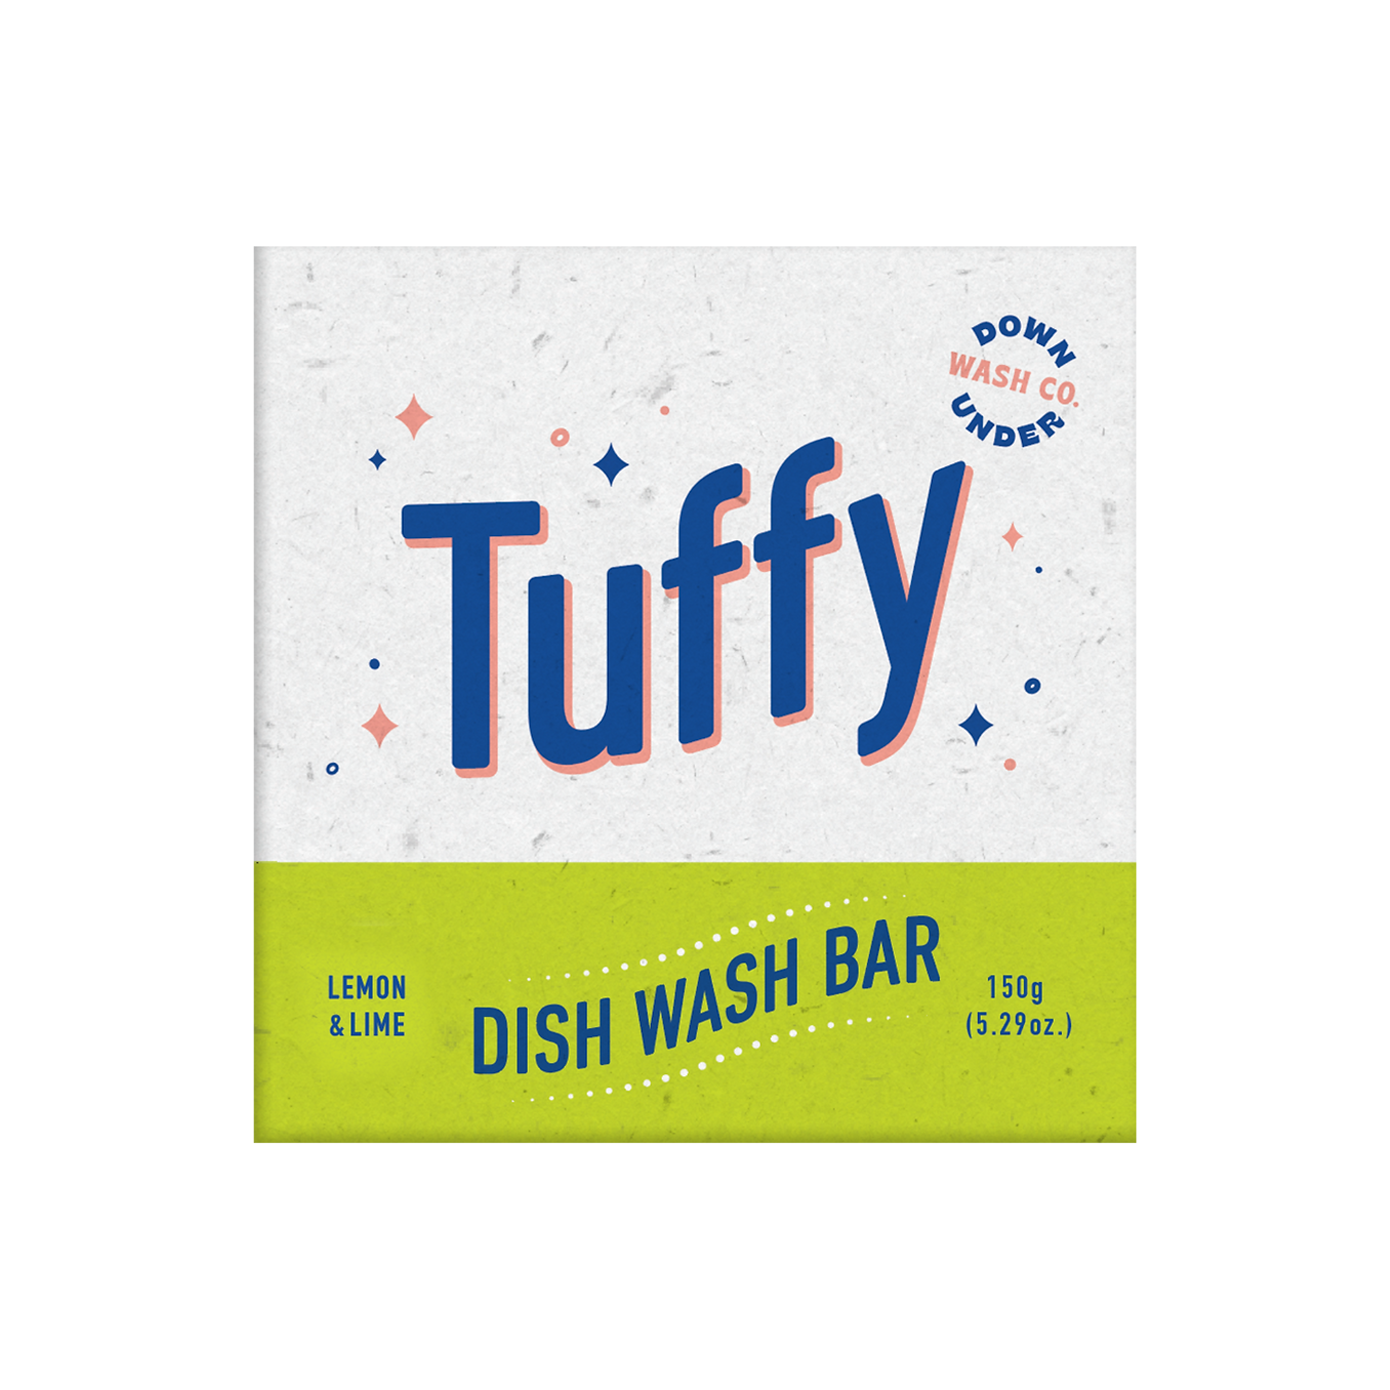 Downunder Wash Co Tuffy Dish Wash Bar 115g, Lemon & Lime